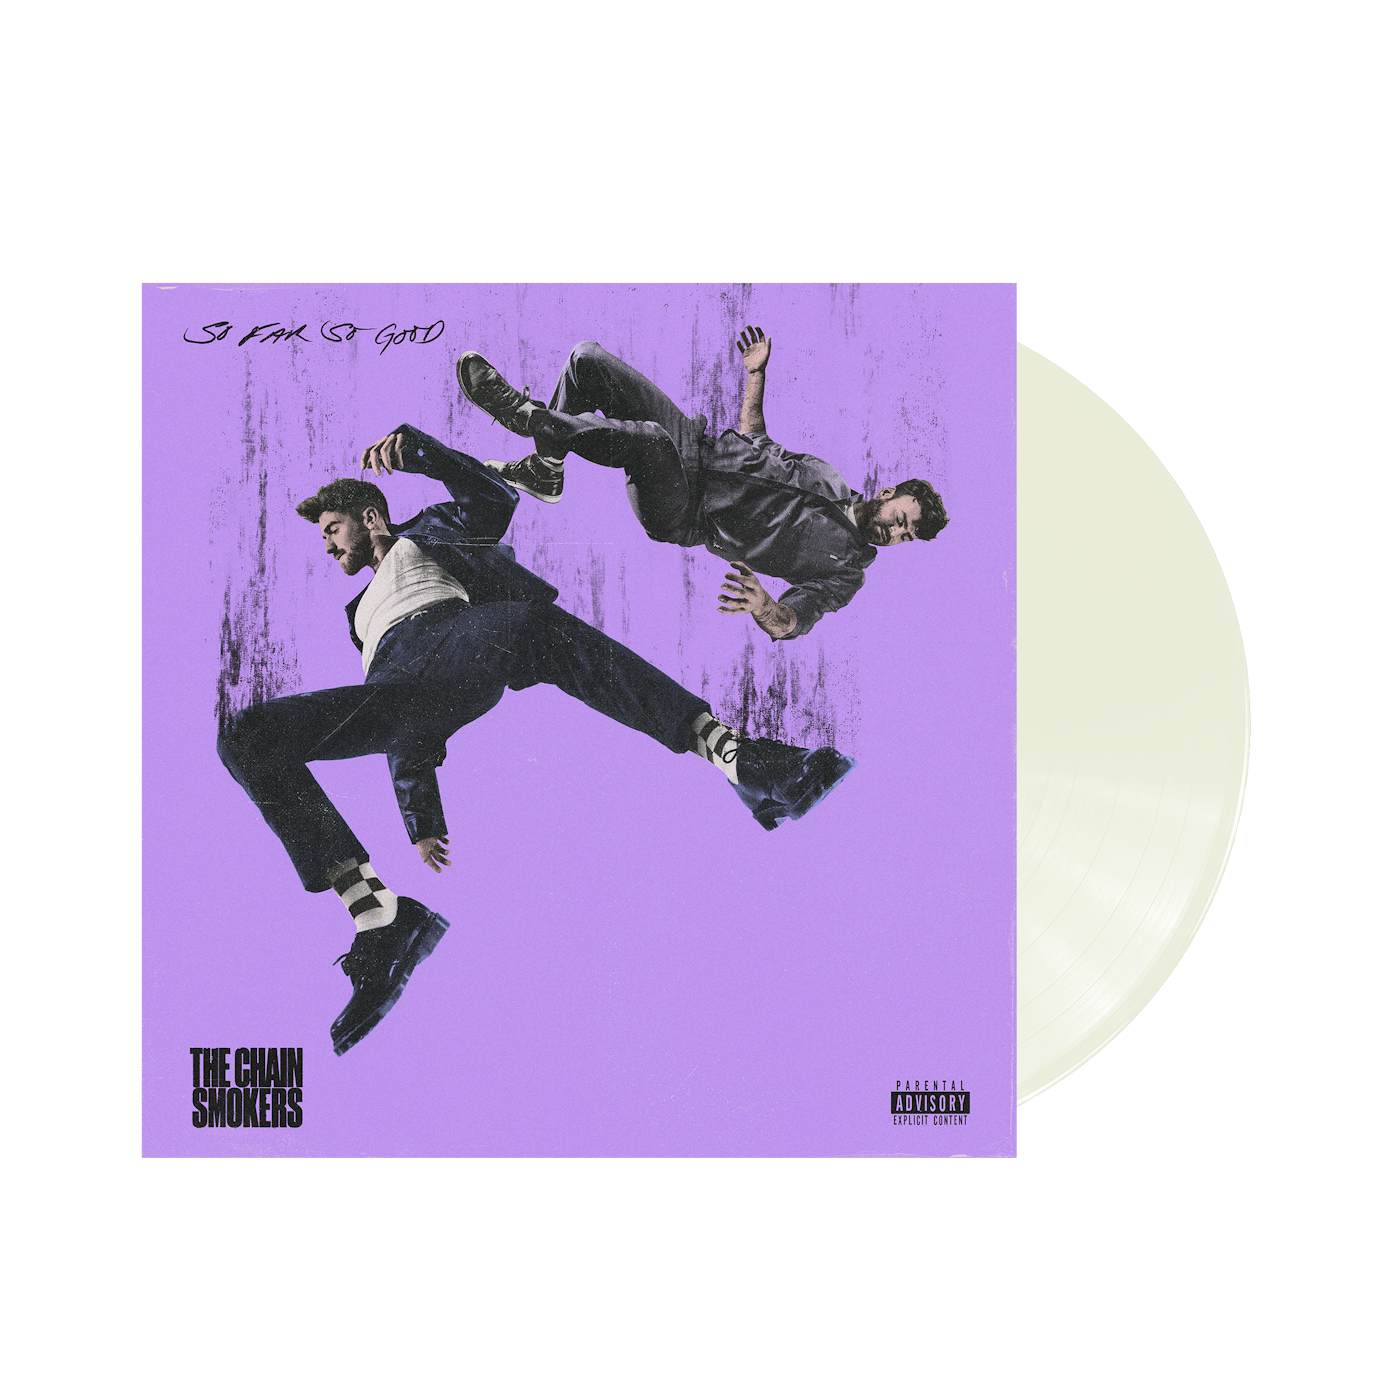 The Chainsmokers - "So Far So Good" Vinyl